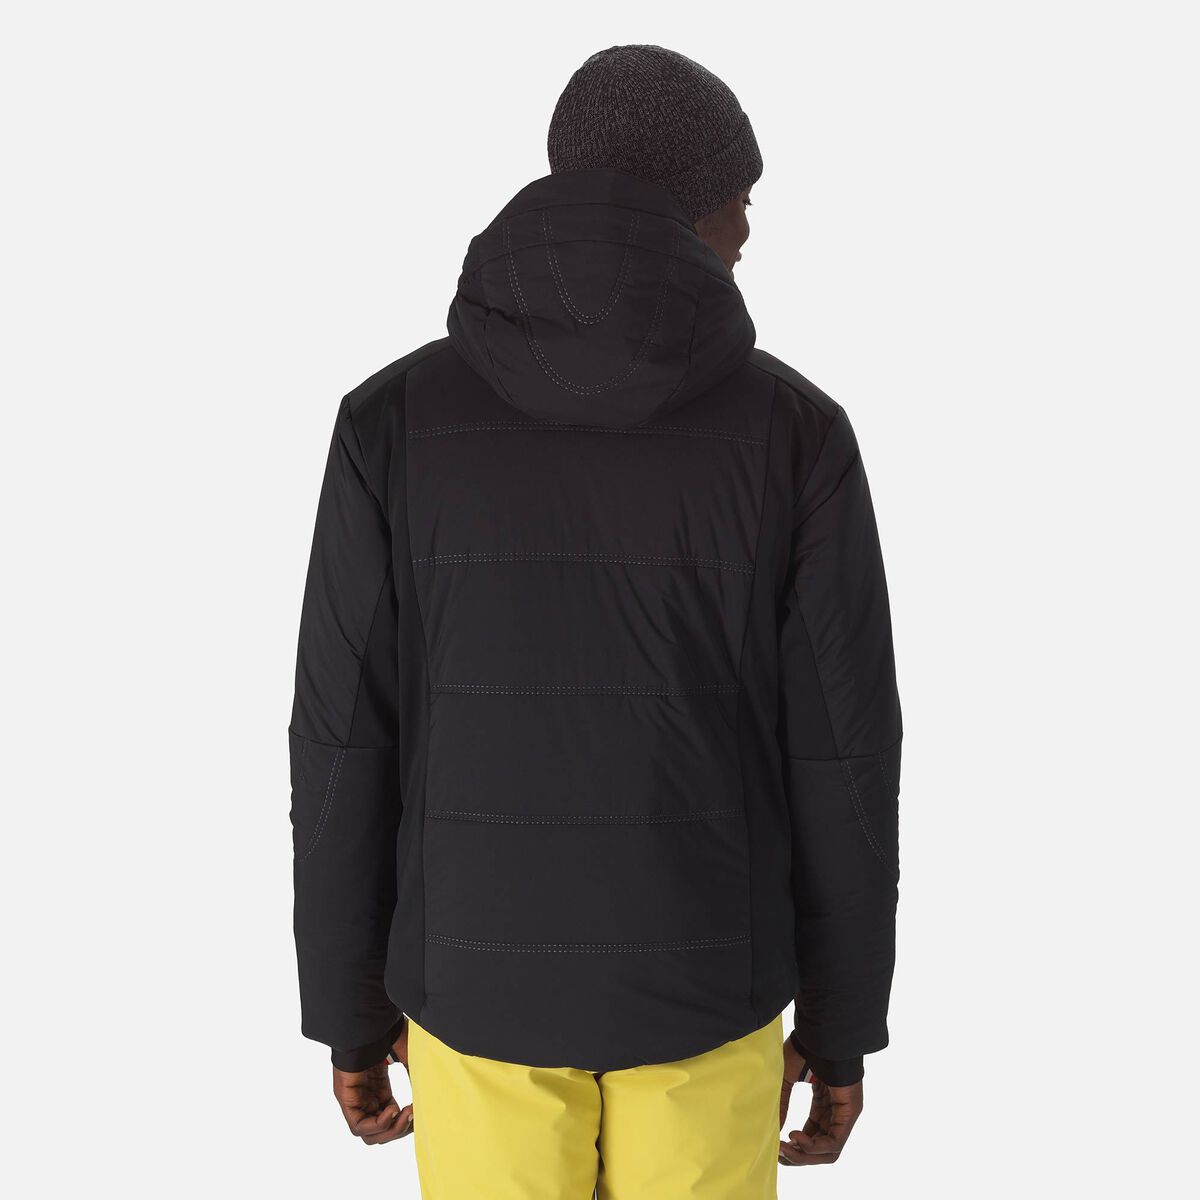 Rossignol Men's Roc Ski Jacket Black